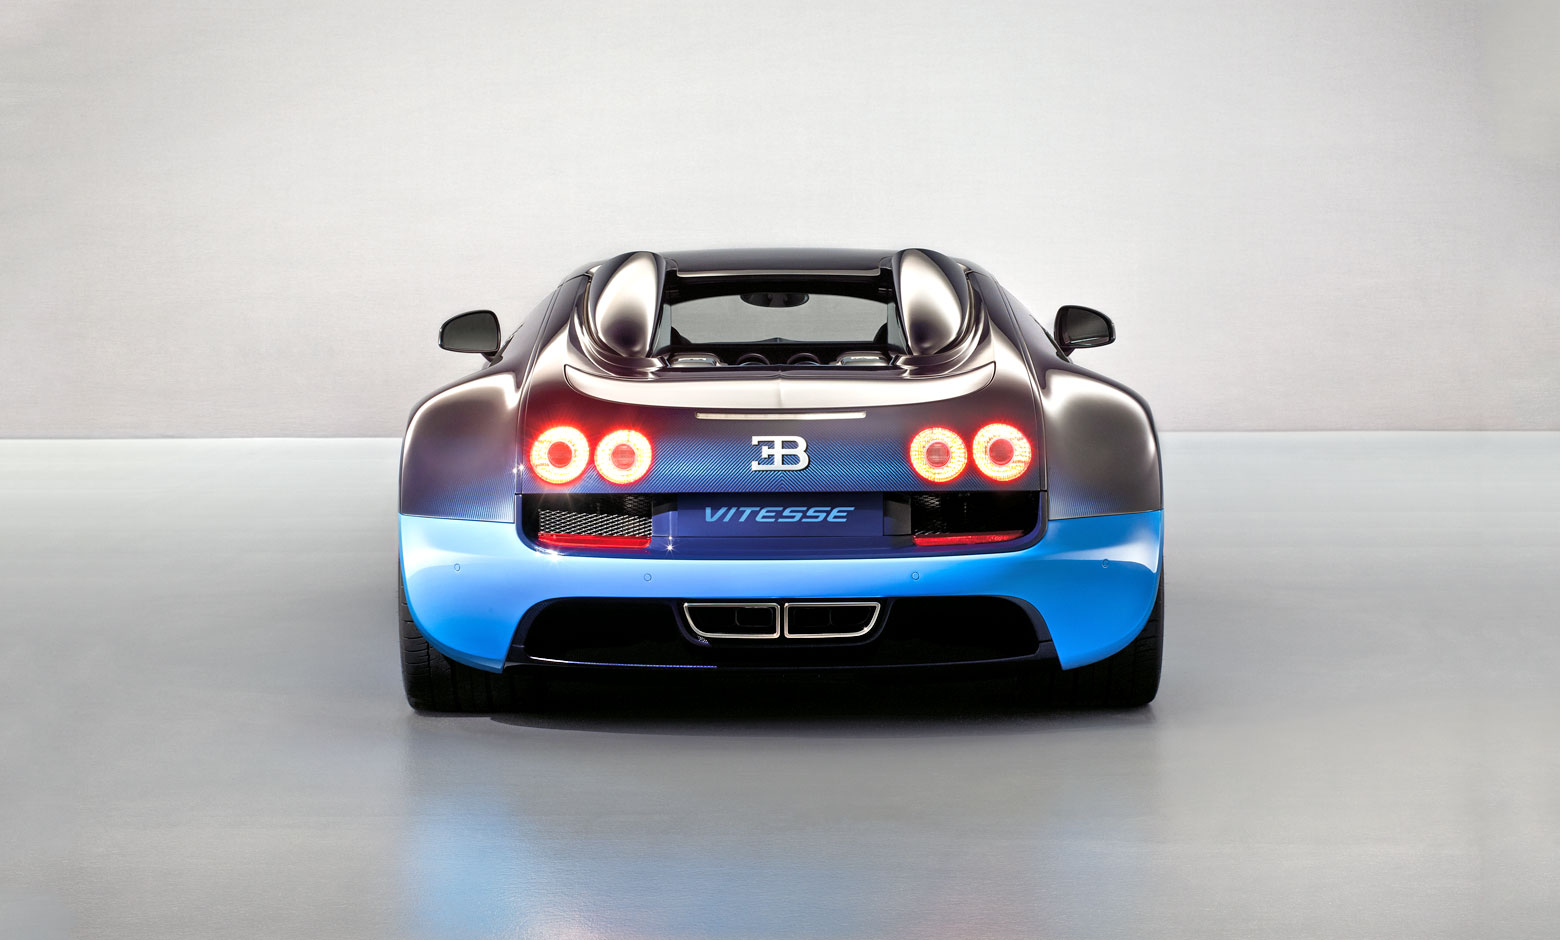 Bugatti Veyron Grand Sport Vitesse Backgrounds, Compatible - PC, Mobile, Gadgets| 1560x940 px